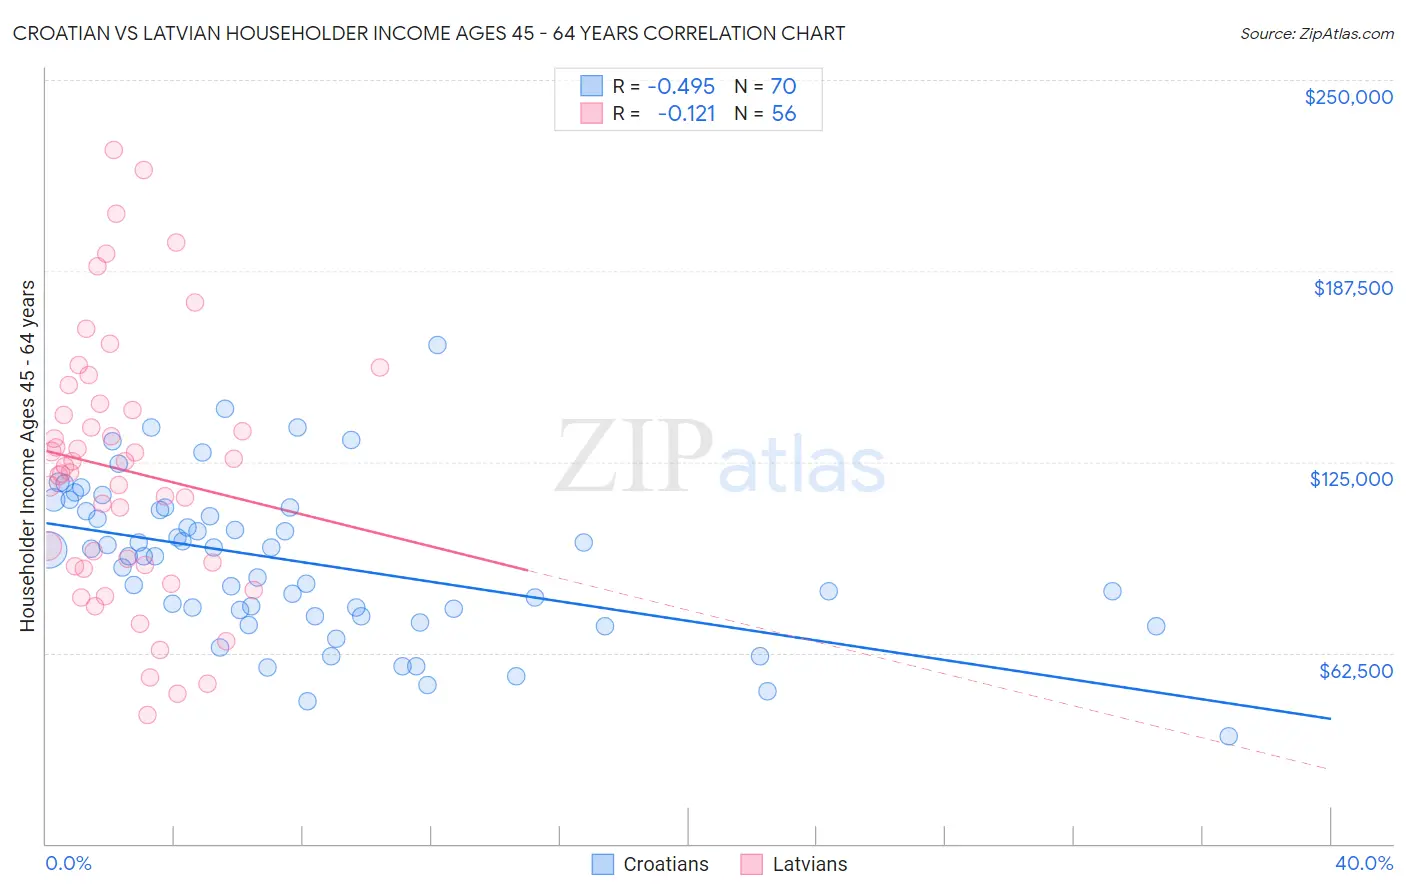 Croatian vs Latvian Householder Income Ages 45 - 64 years